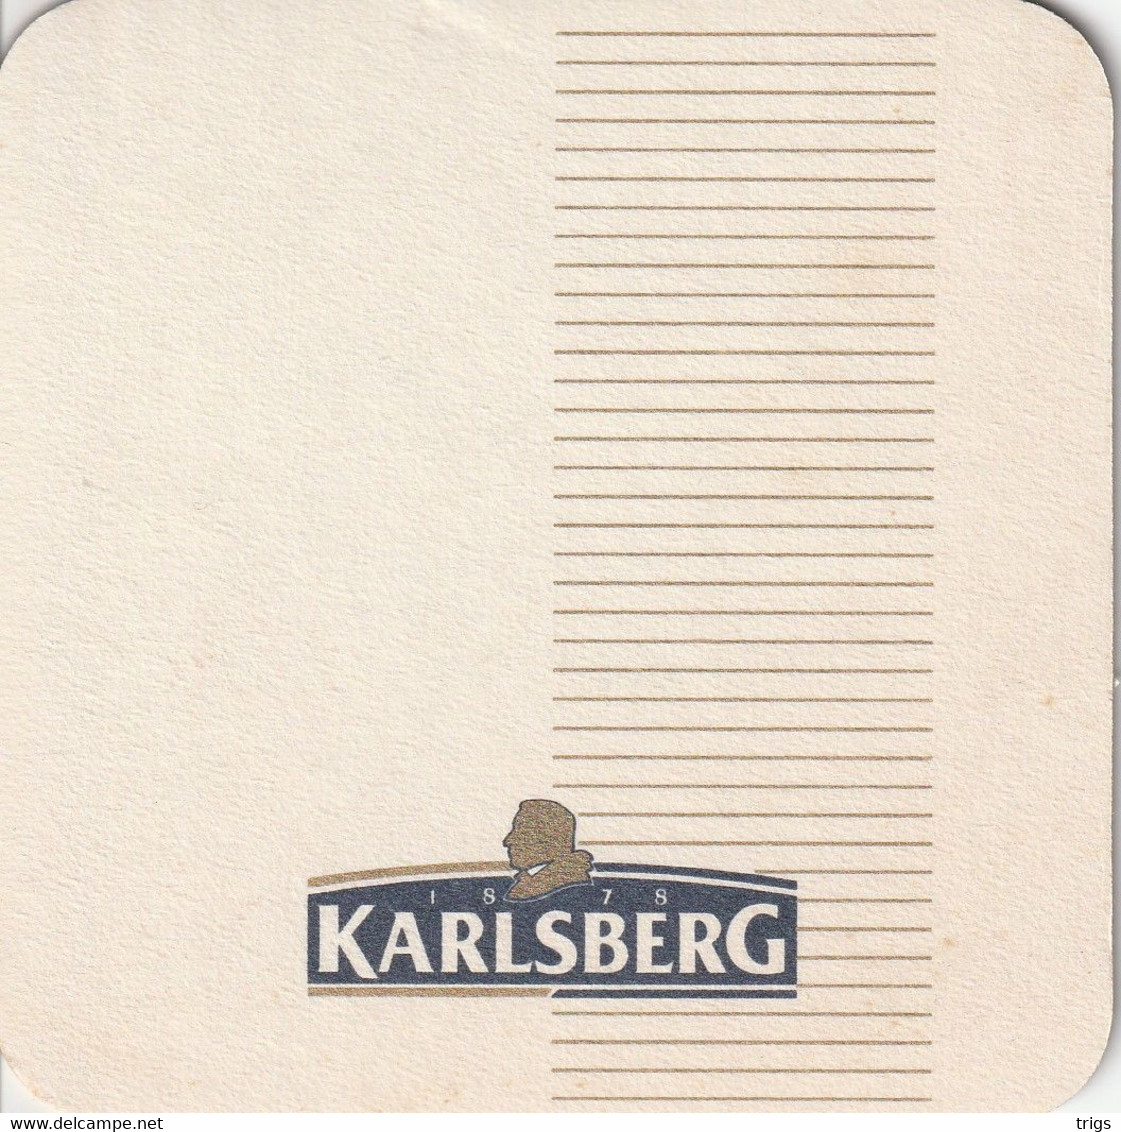 Mixery Karlsberg - Coasters